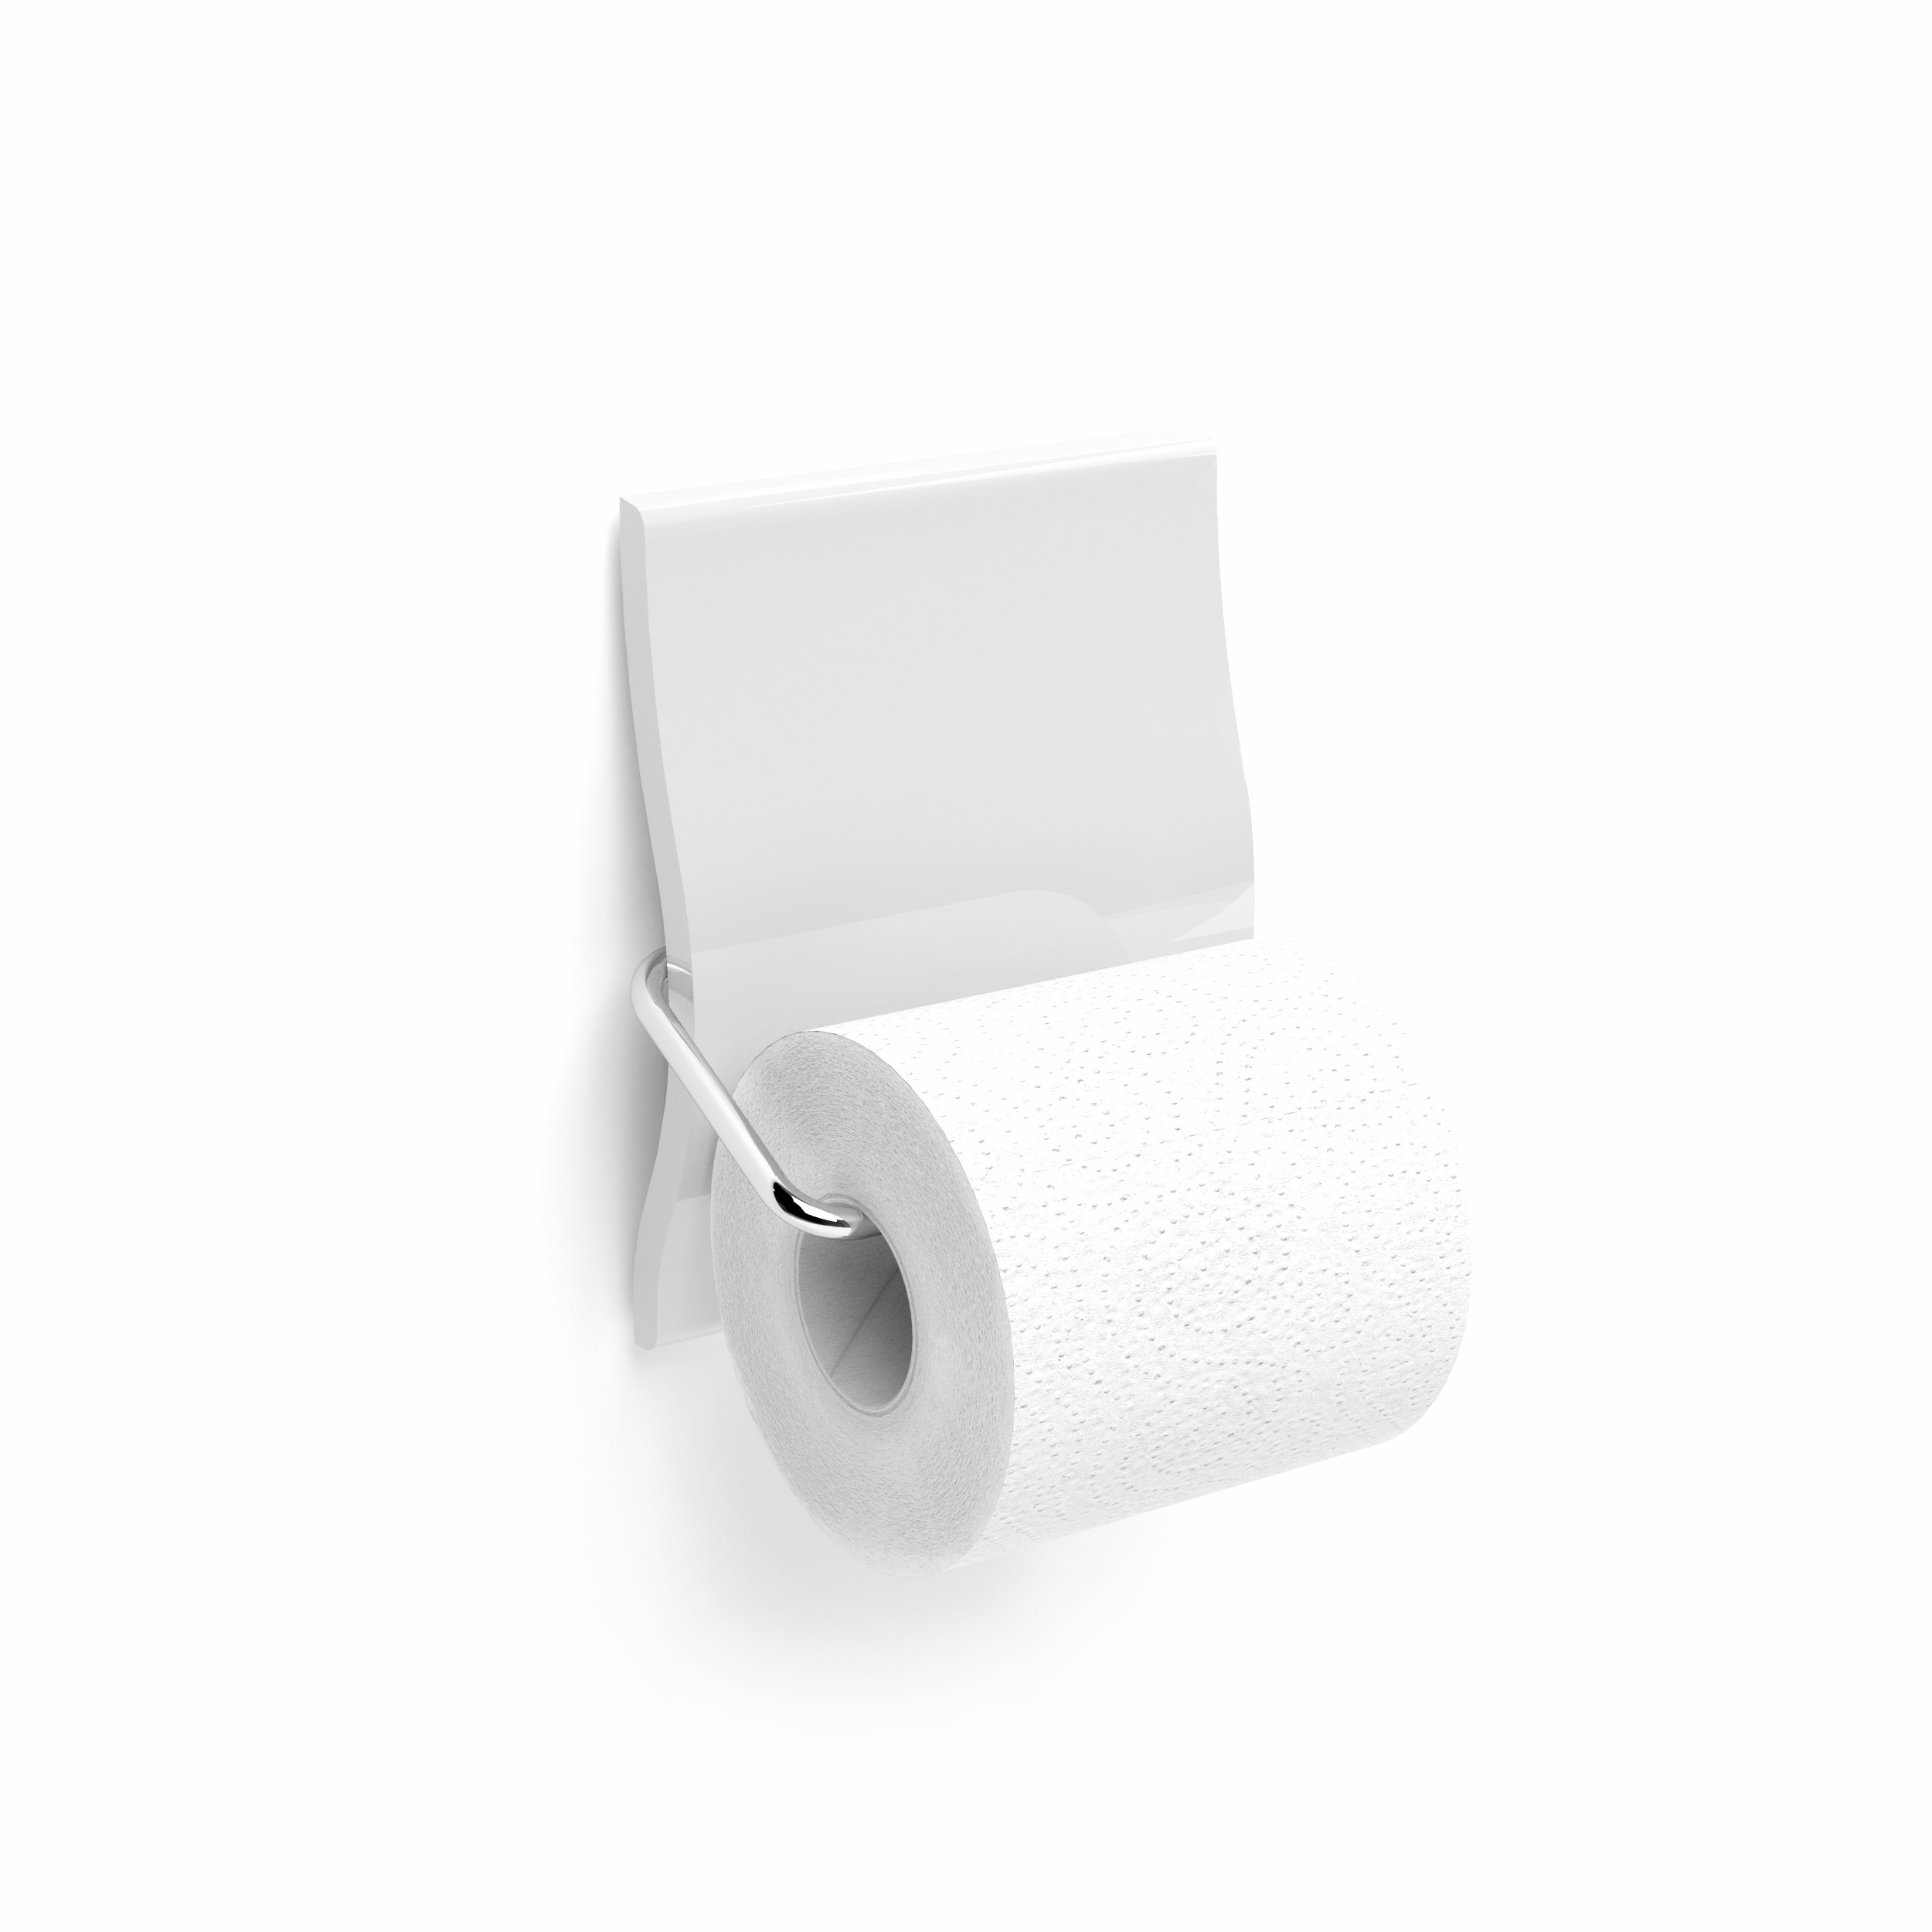 Porte-papier wc blanc - Olfa, expert en toilettes